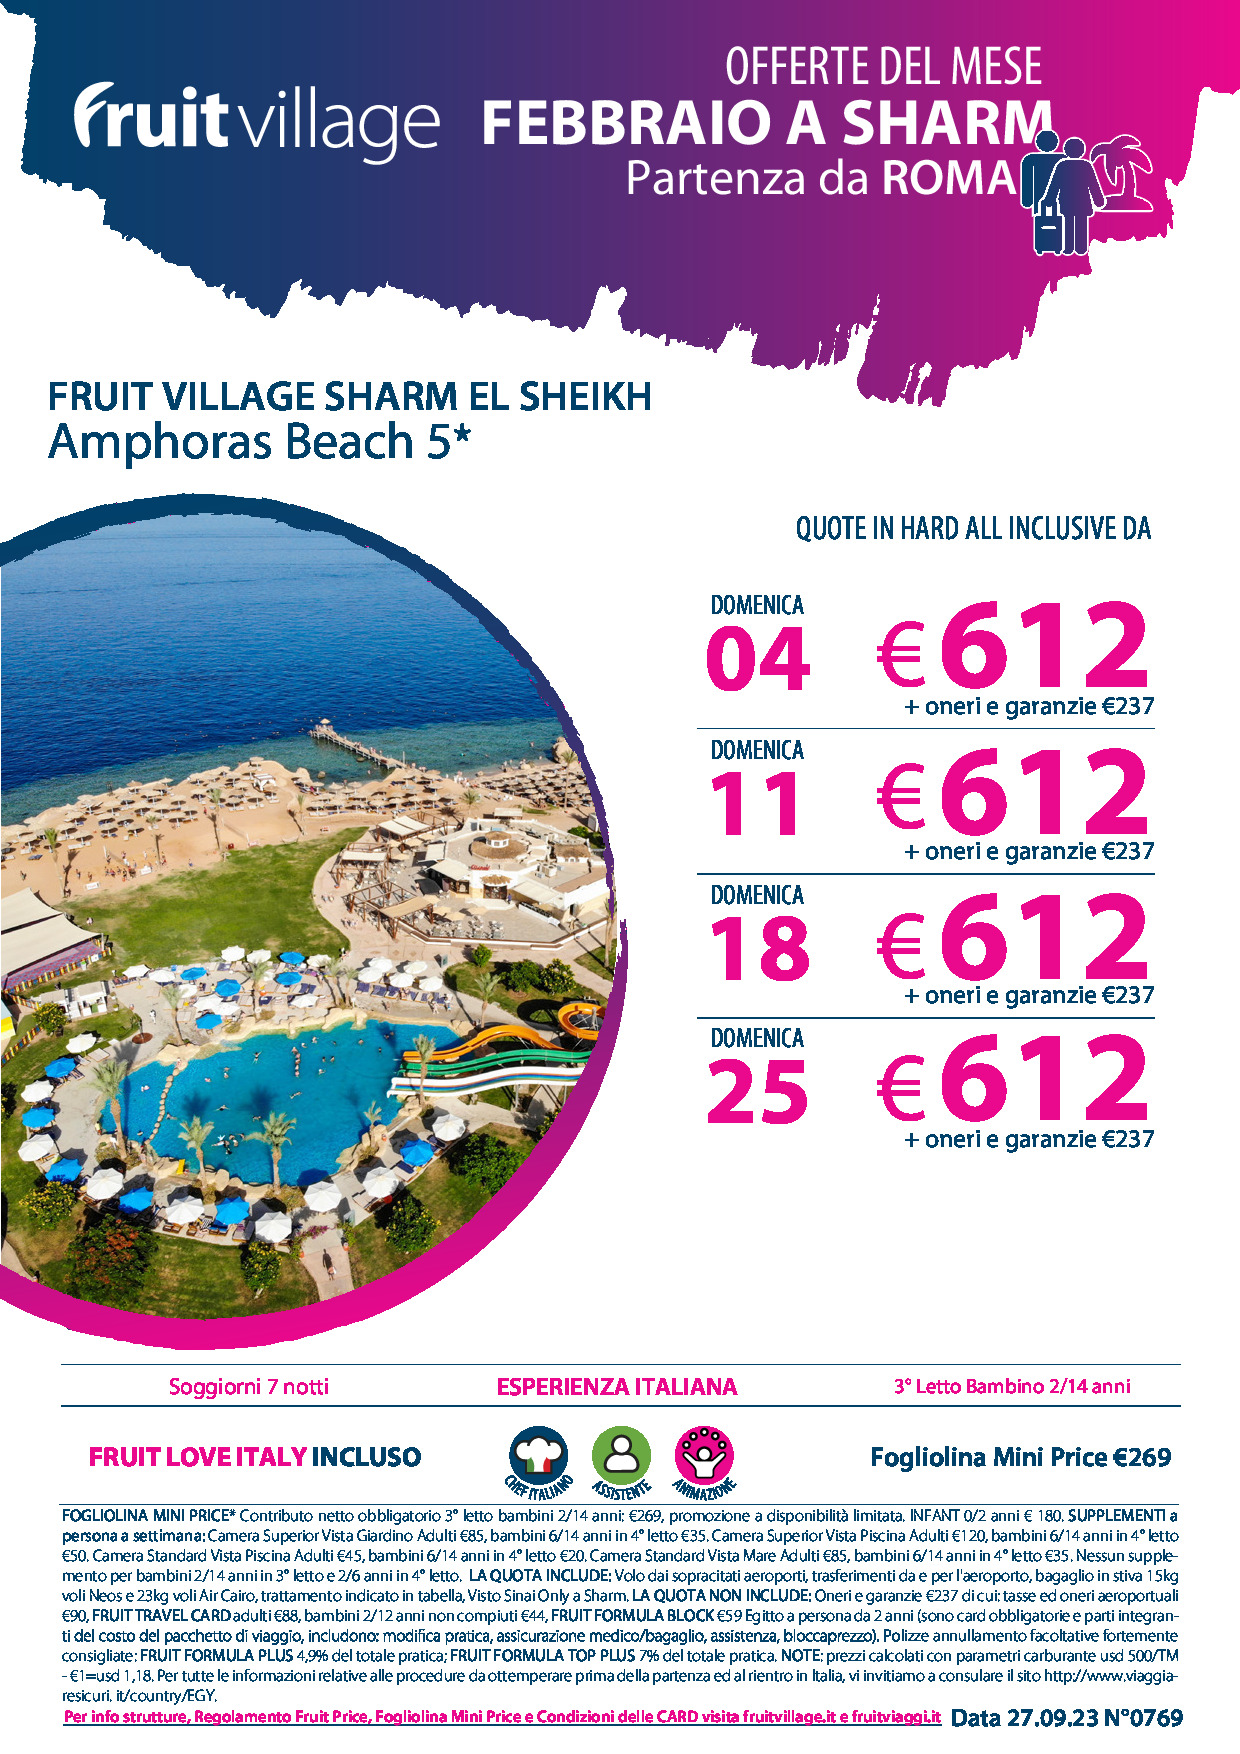 FRUIT VILLAGE Sharm El Sheikh Amphoras Beach - da Roma a Febbraio